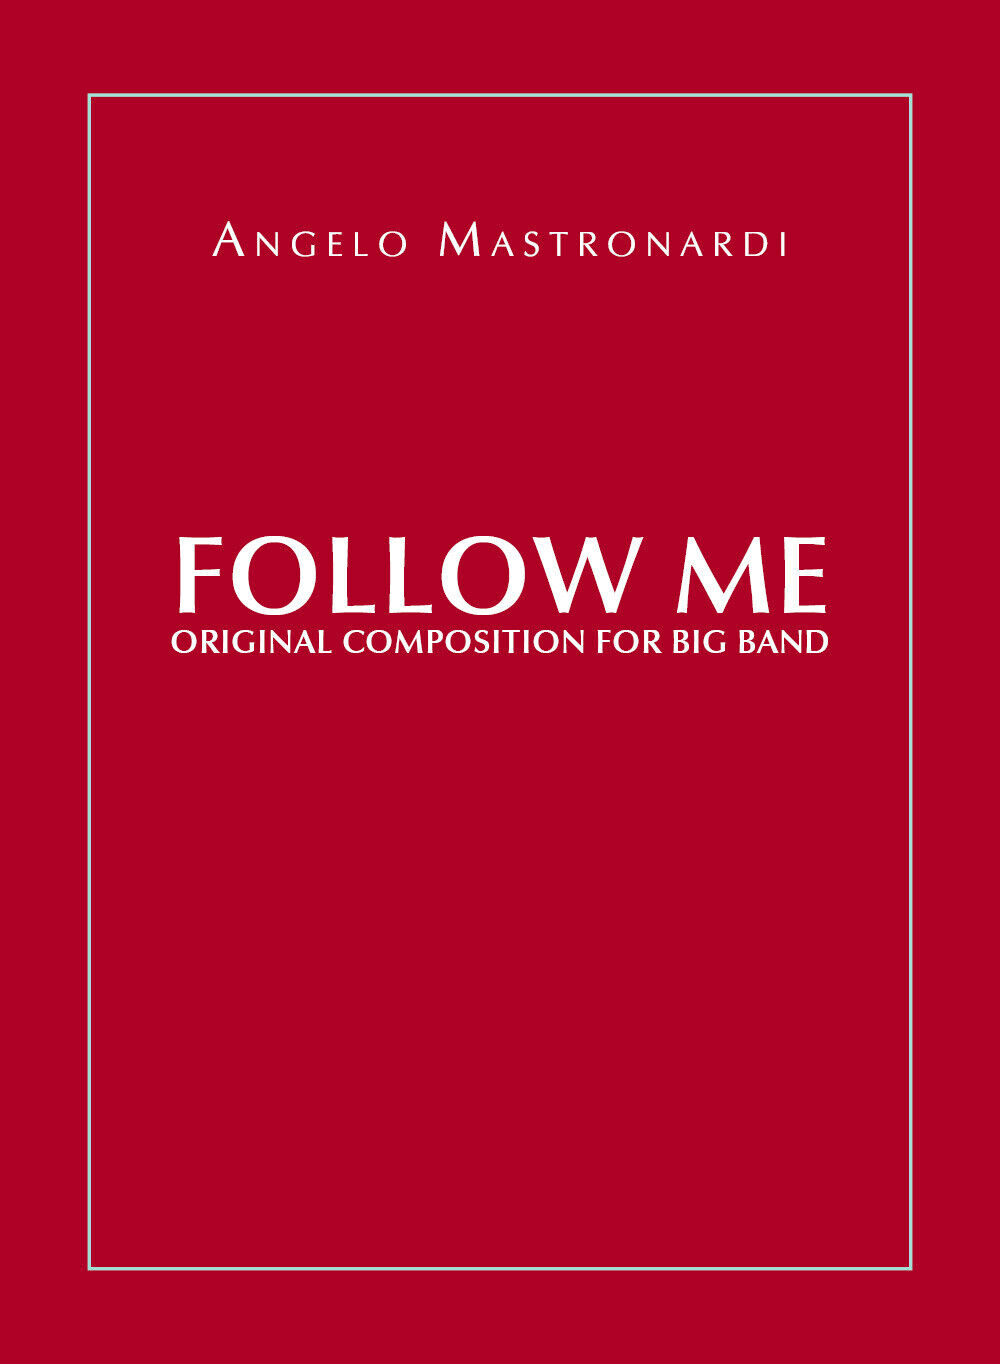 Follow me. Original composition for Big Band di Angelo Mastronardi,  2020,  Youc